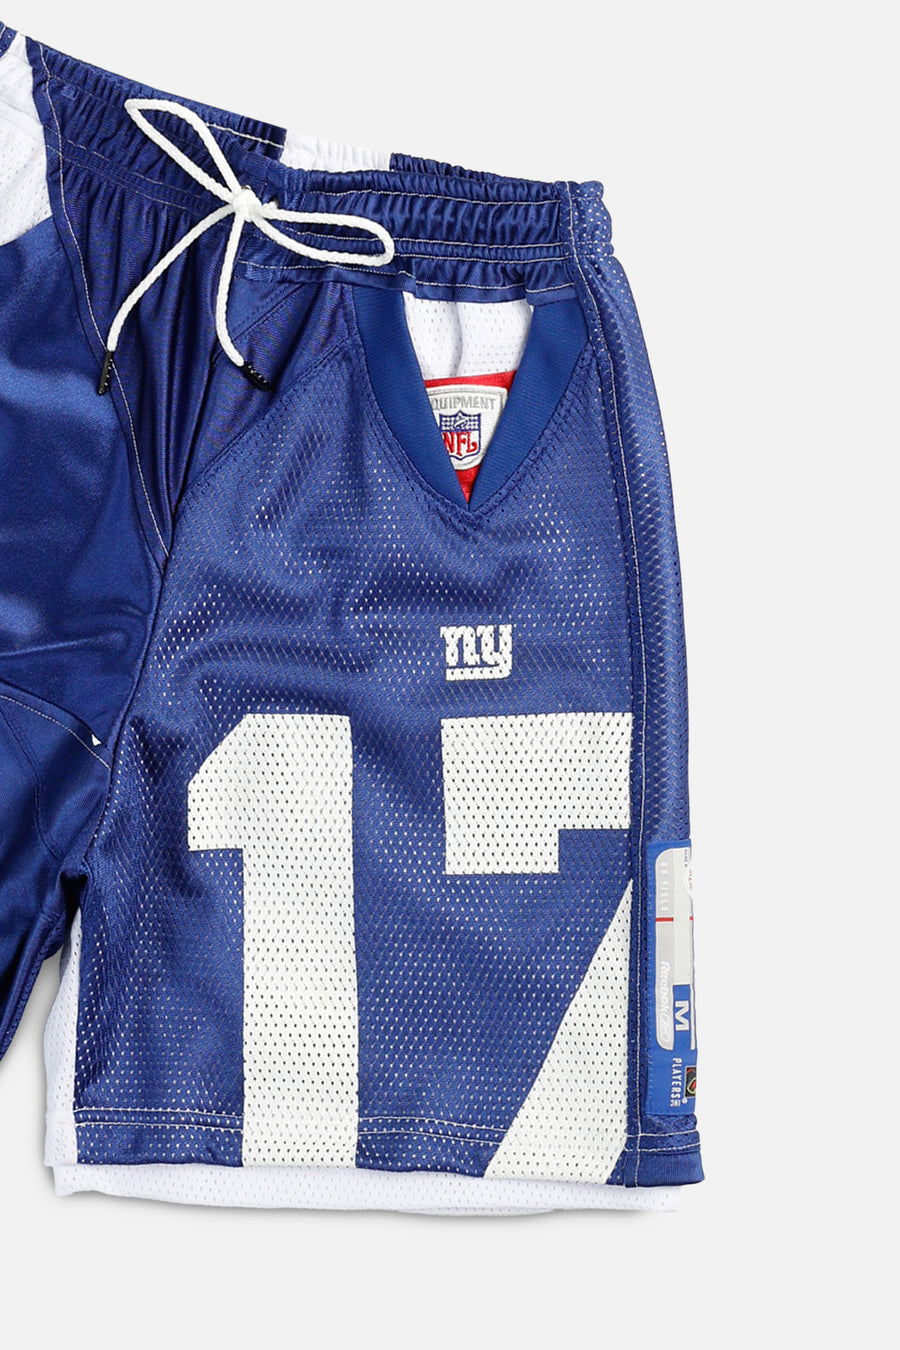 Unisex Rework NY Giants NFL Jersey Shorts - S